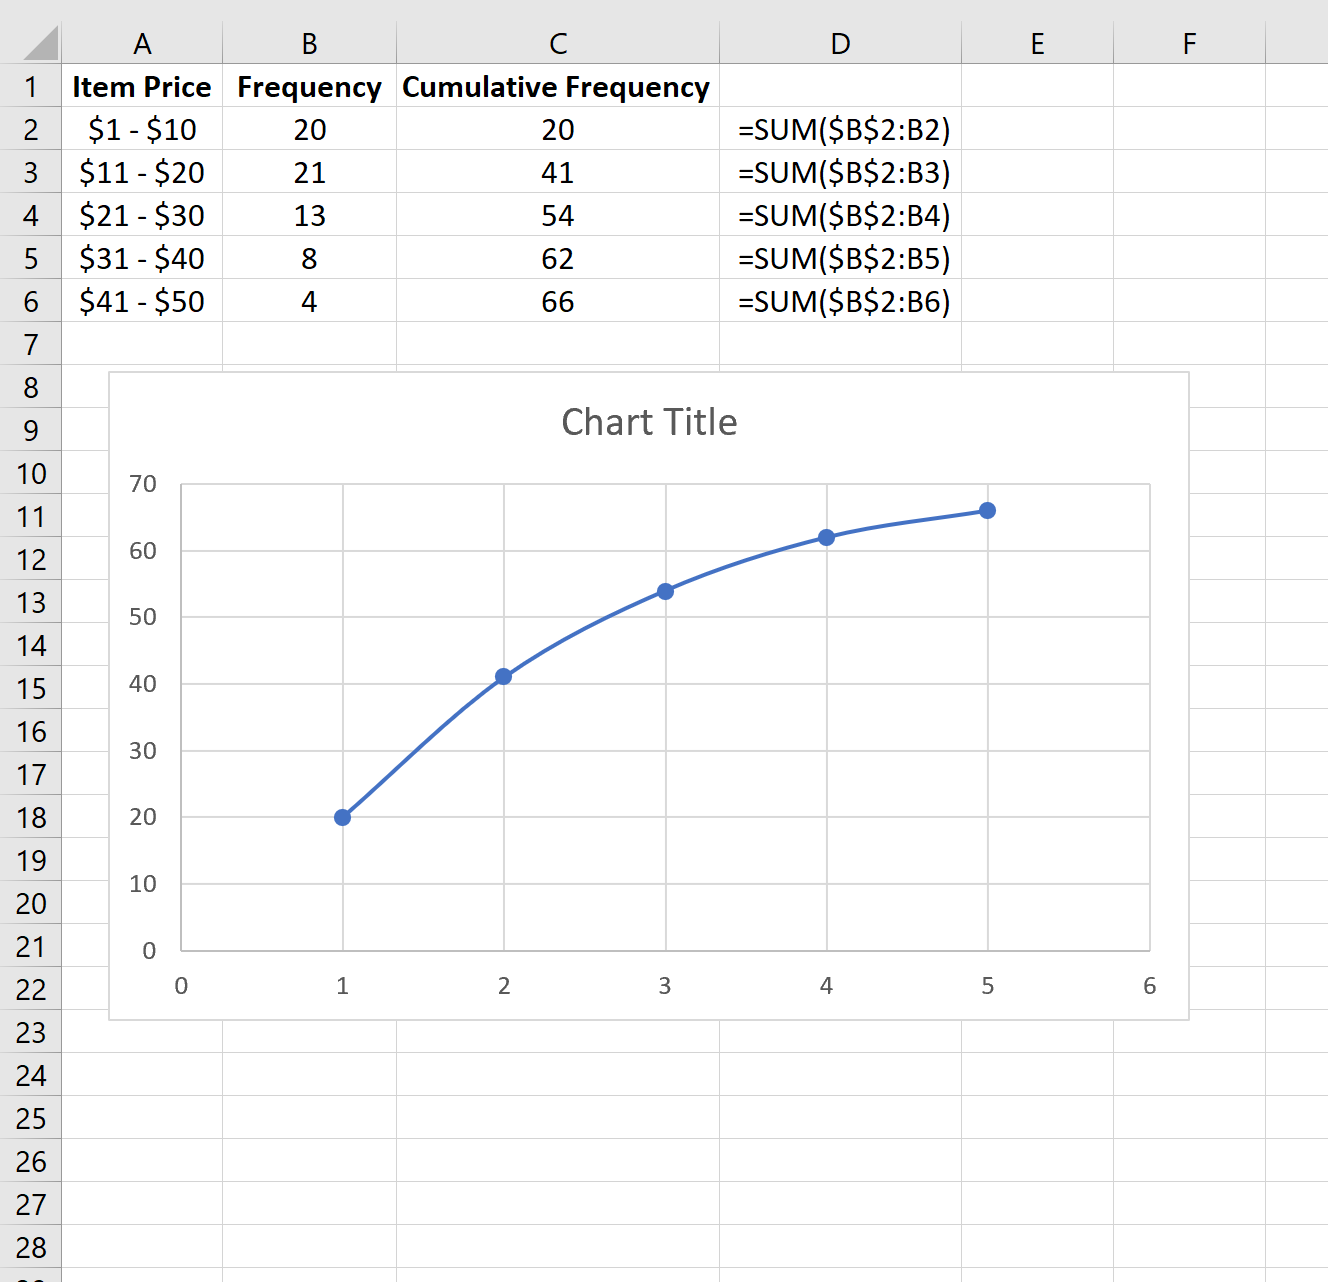 Grafico della frequenza cumulativa in Excel